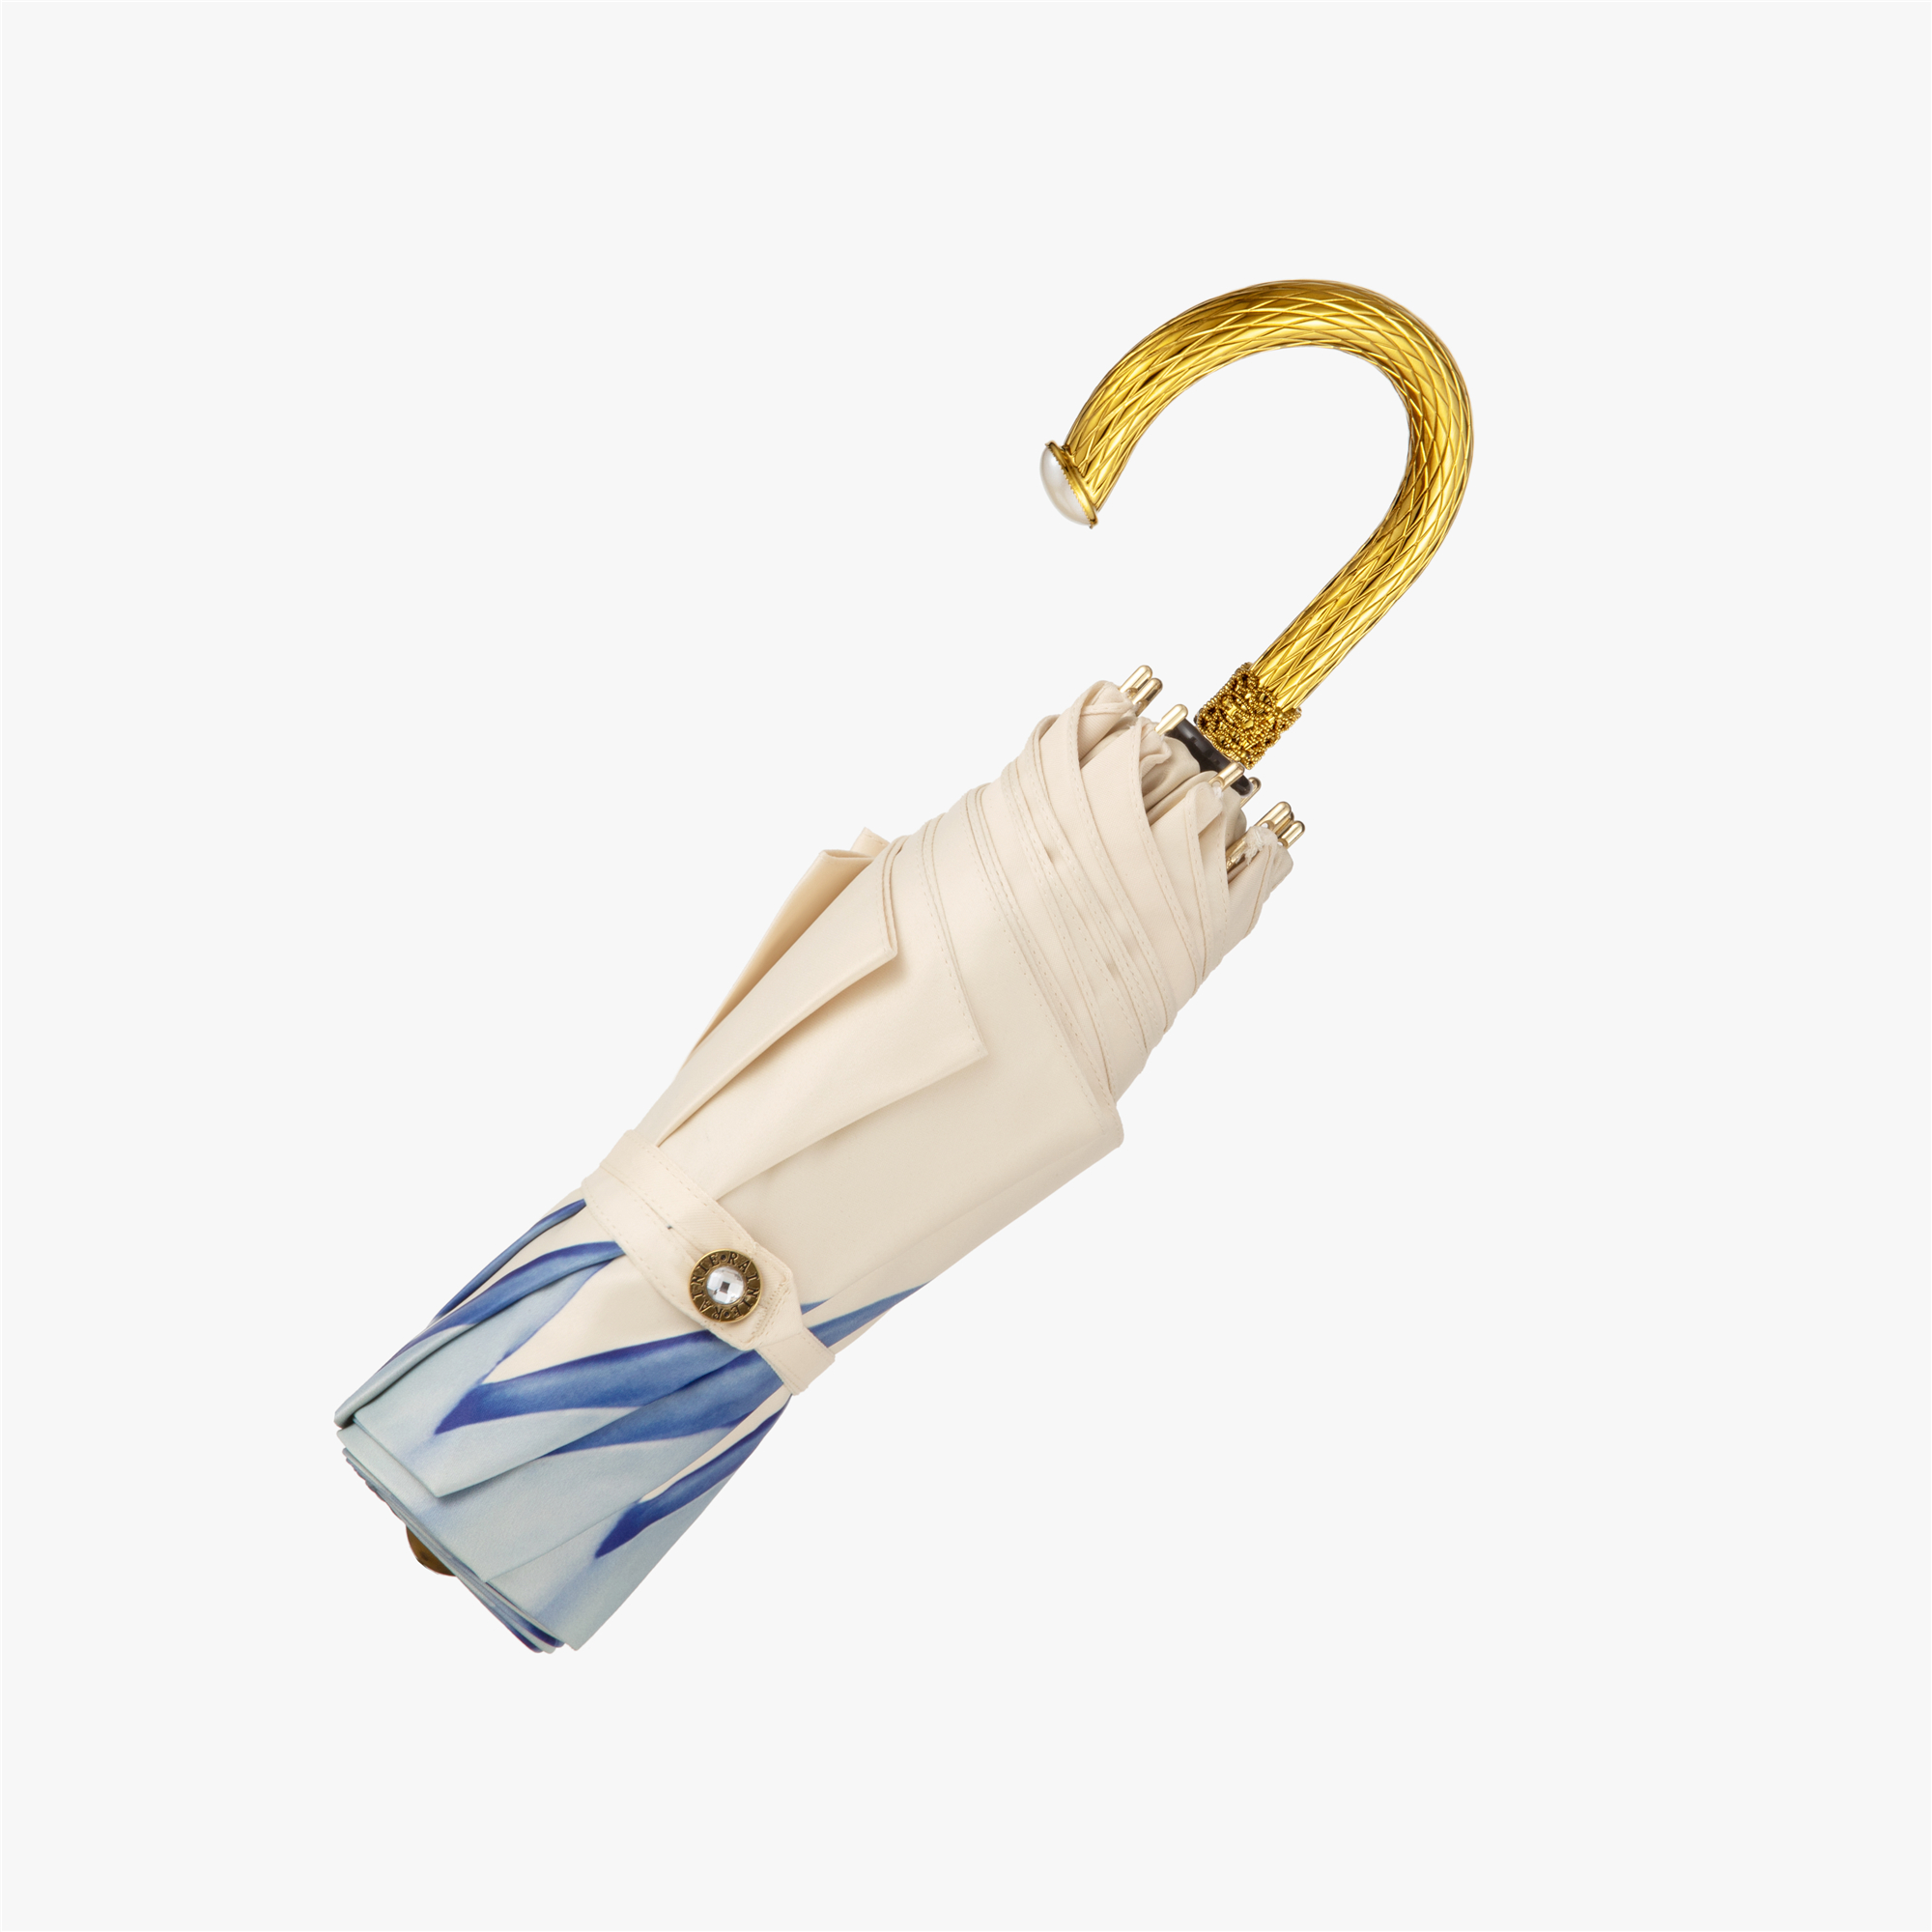 Diamond-encrusted folding umbrella with bent handle